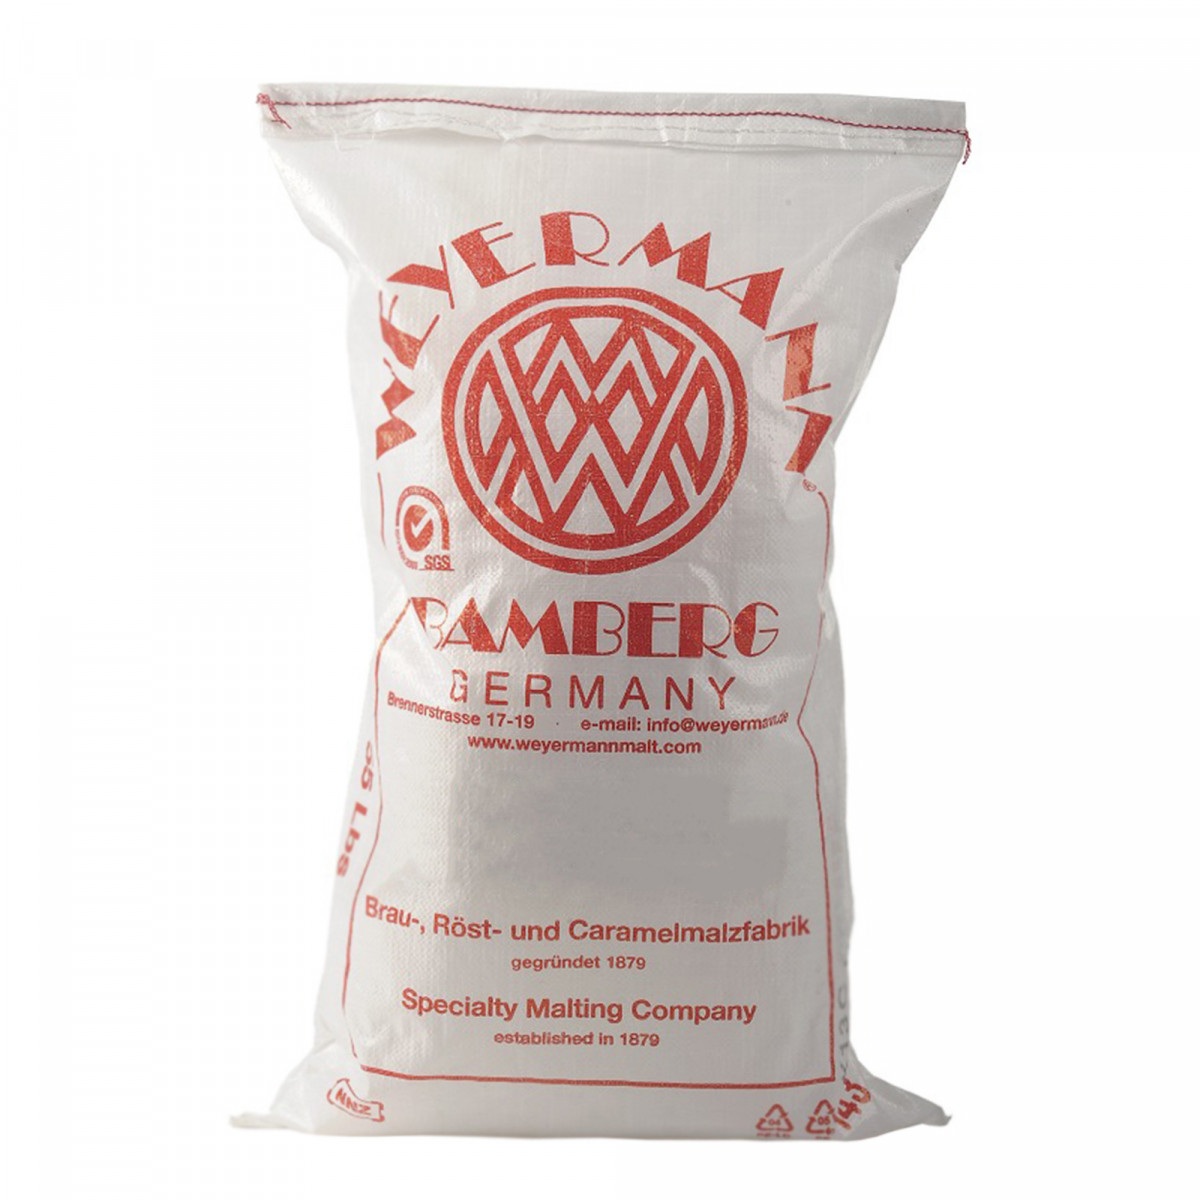 Weyermann® beech smoked malt 4-8 EBC 25 kg